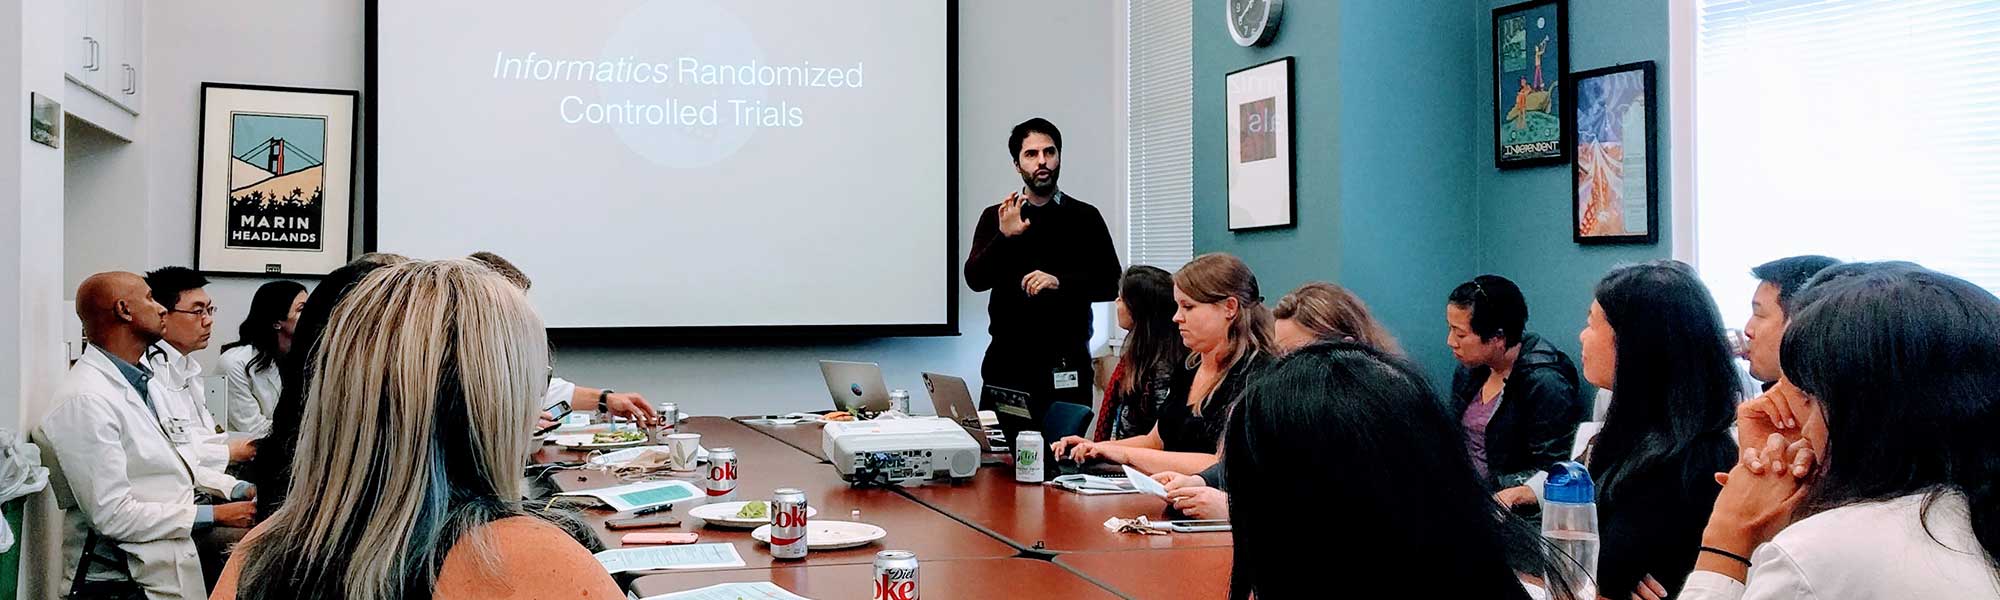 Nader-Najafi-on-randomized-controlled-trials-in-informatics